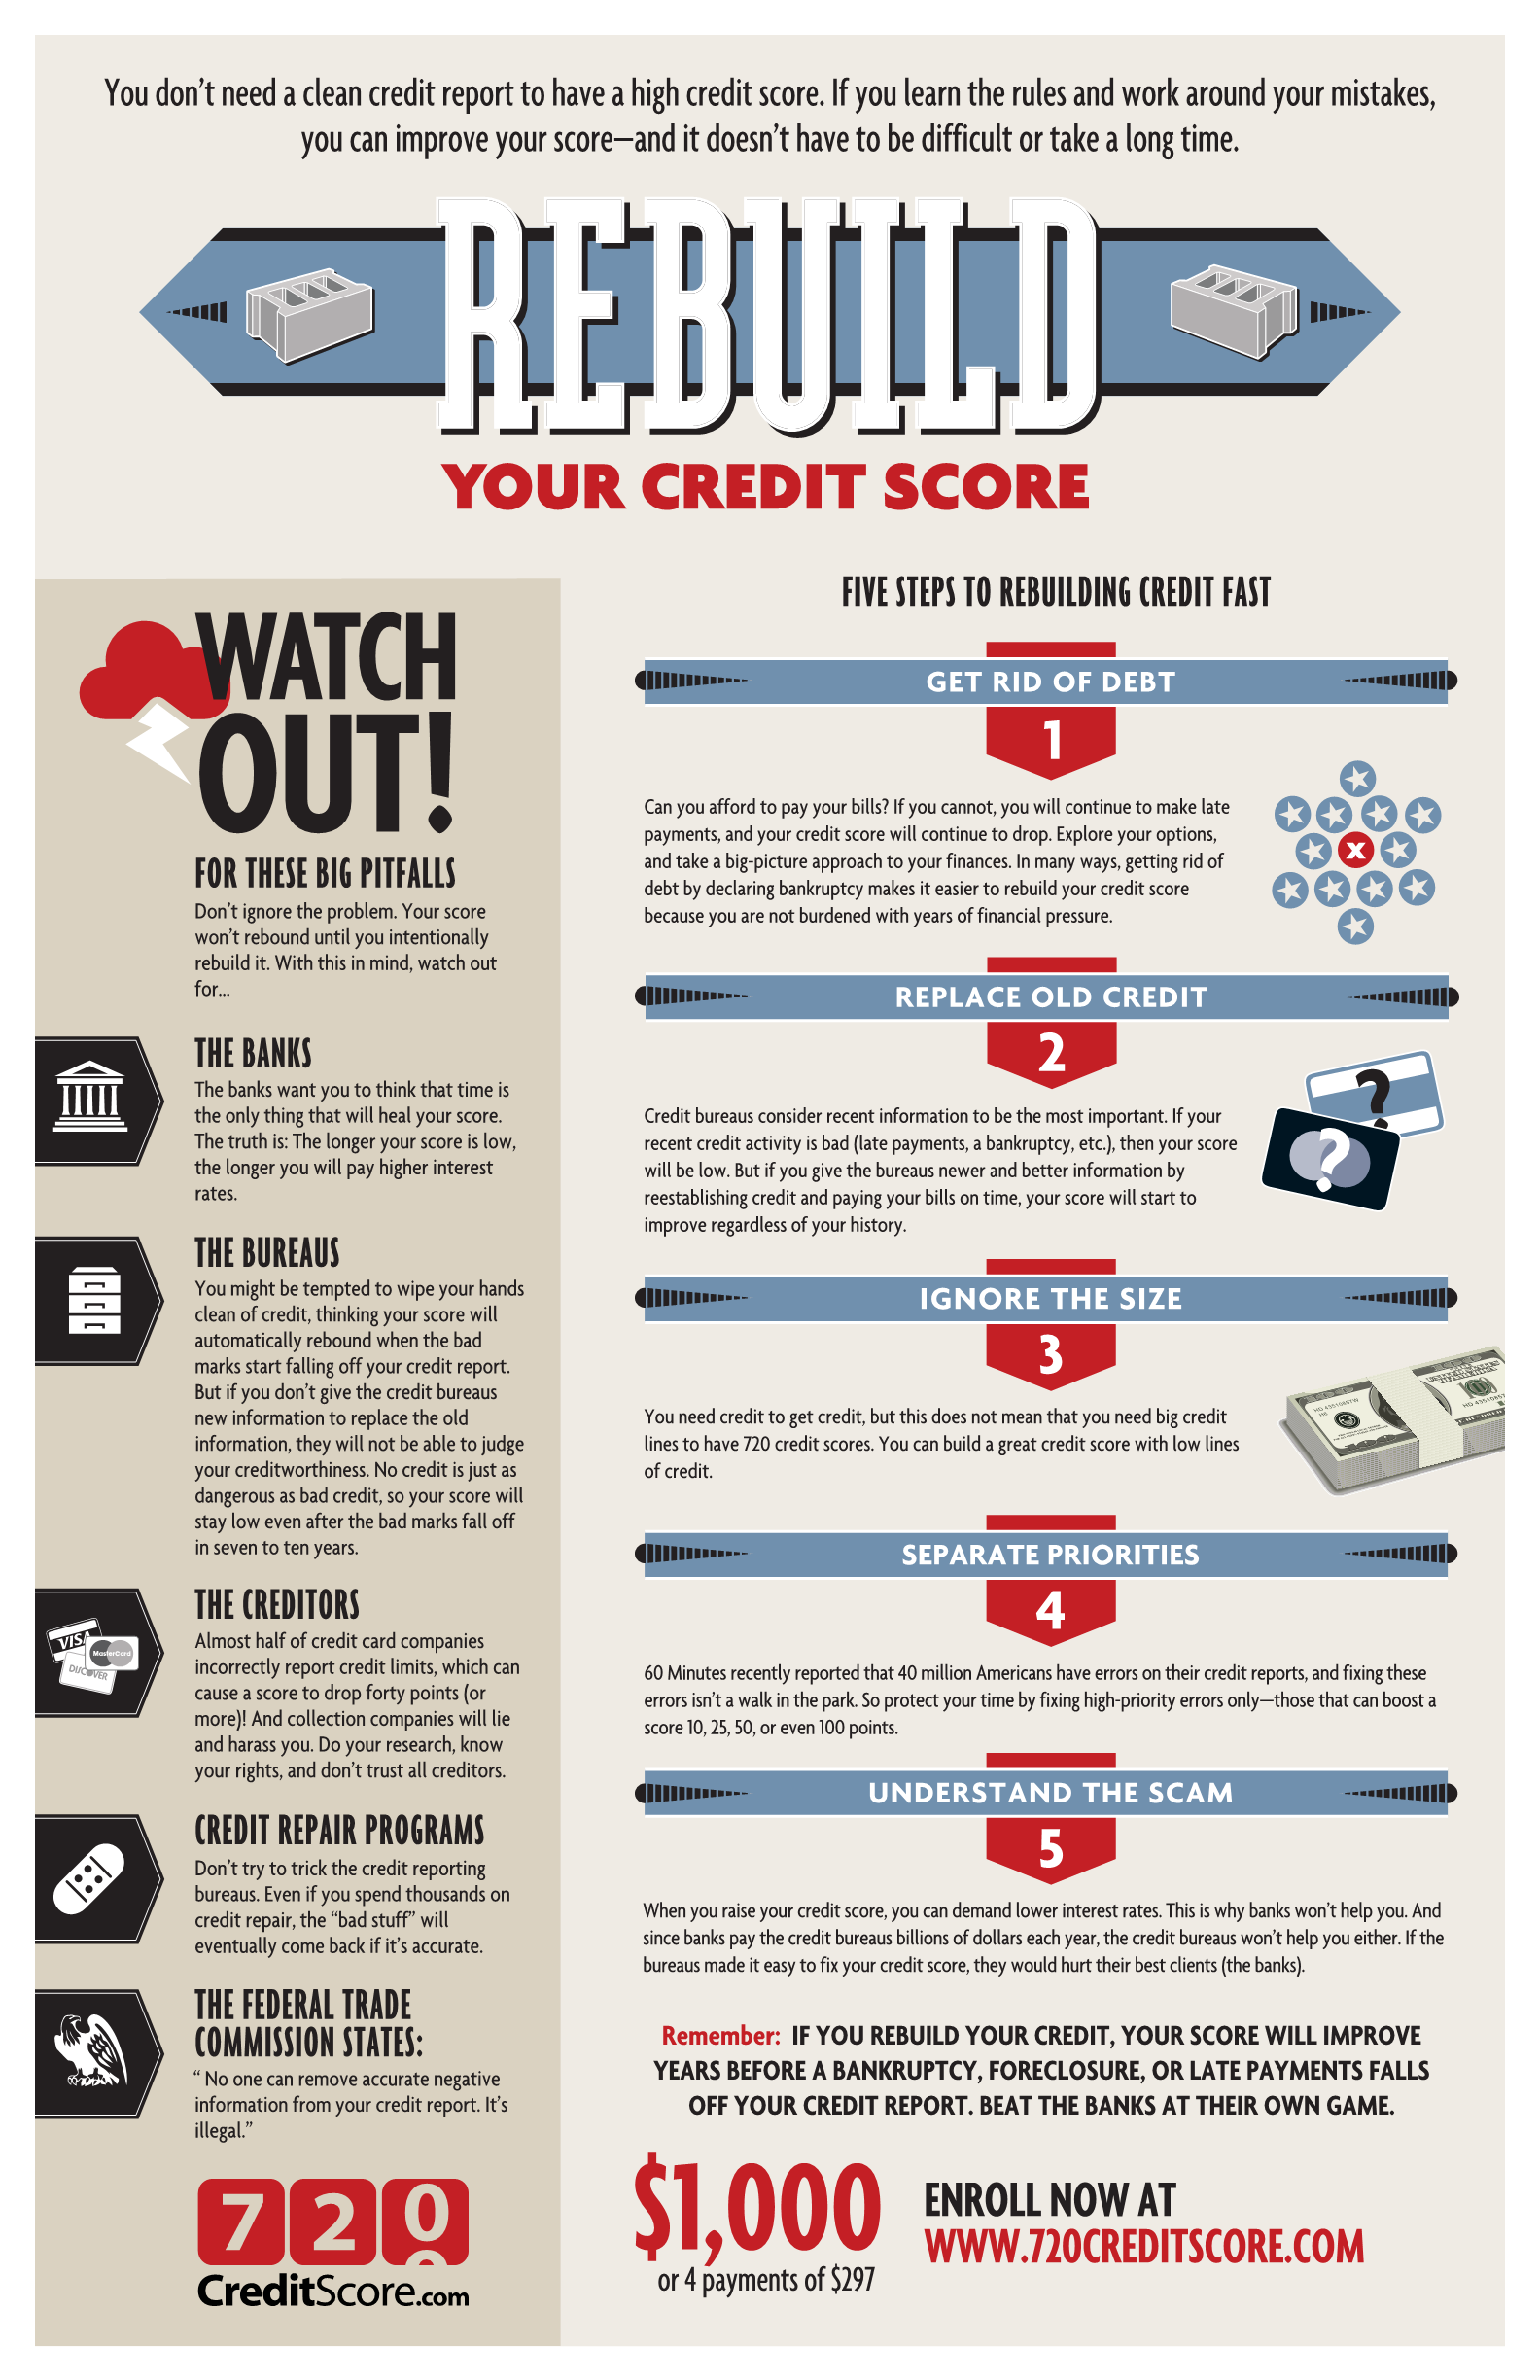 Image: 720CreditScore.com Flyer. Rebuild your credit score after bankruptcy.